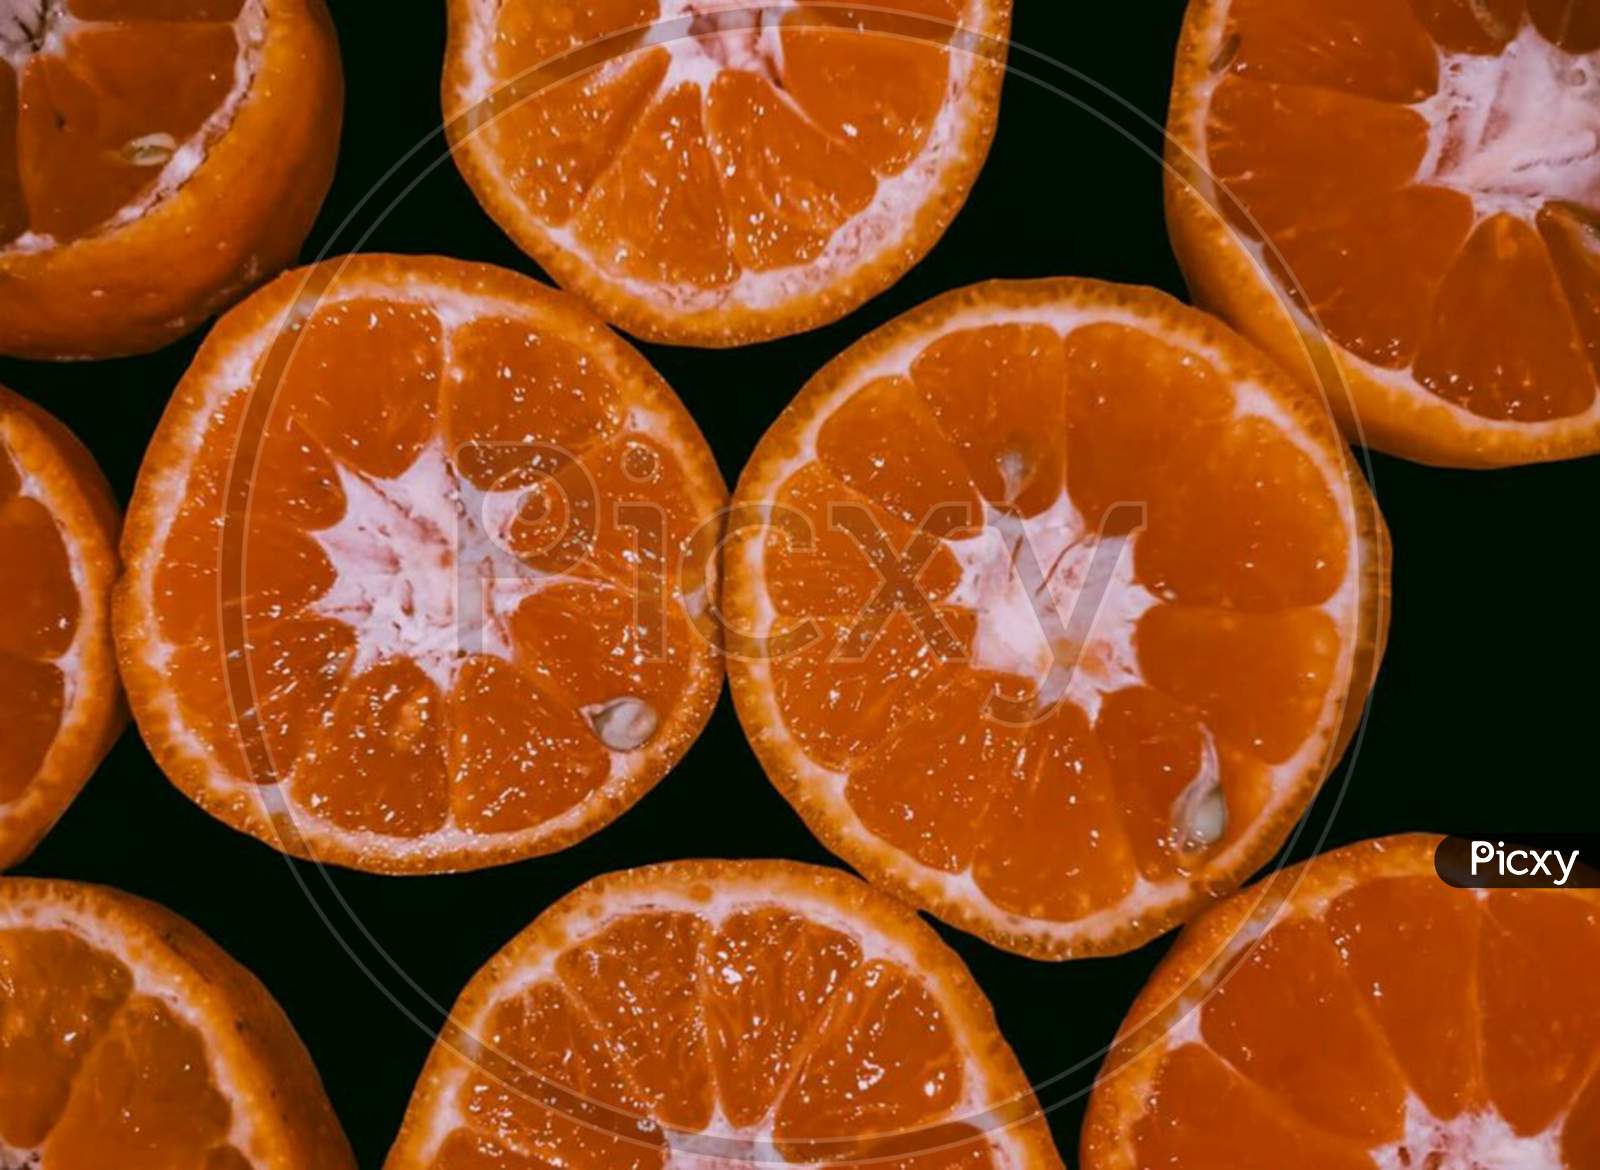 Orange slices kept along each other having seeds in them